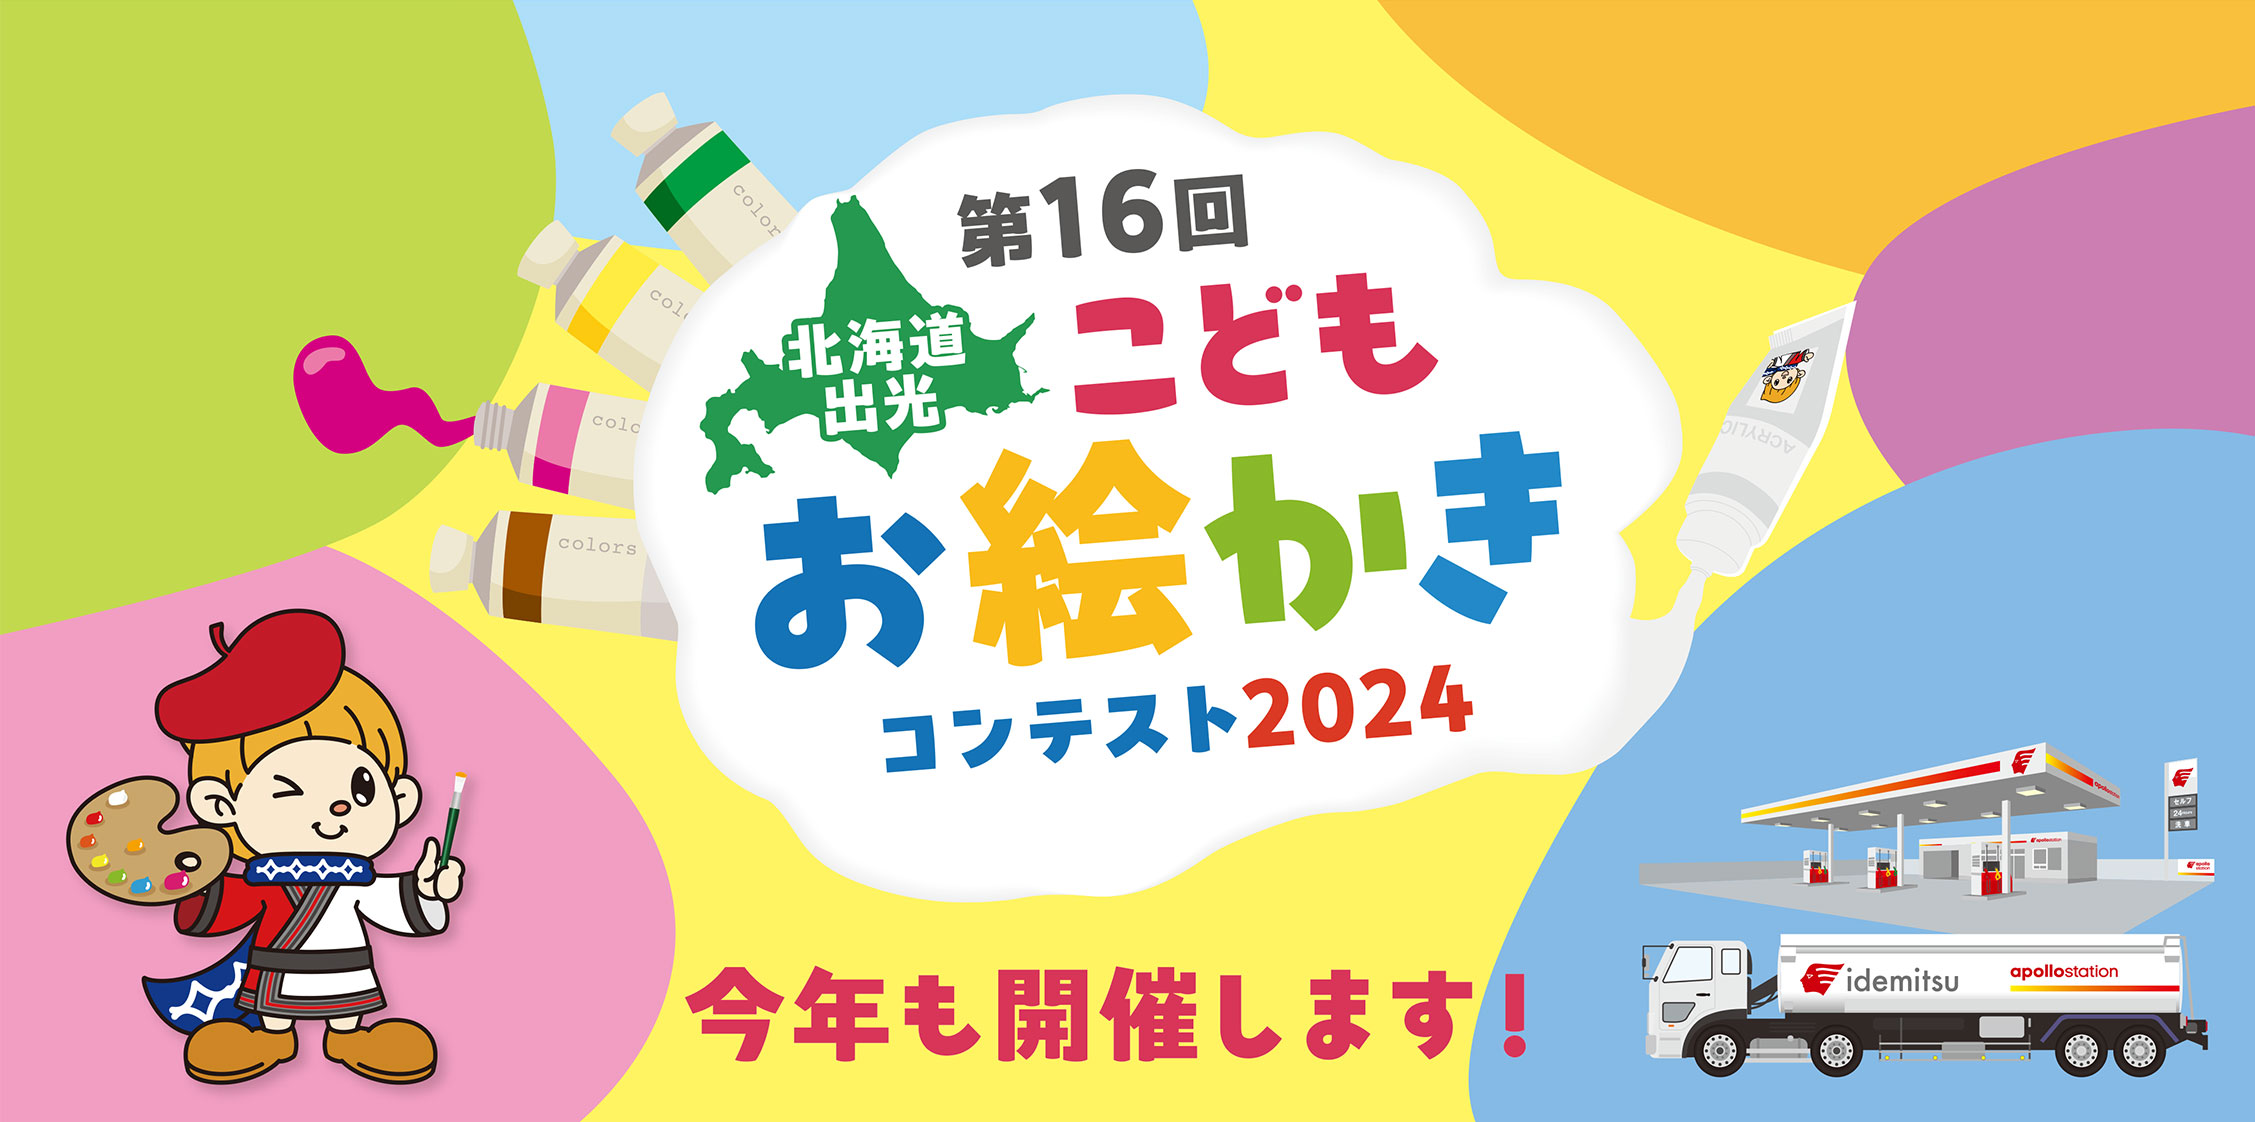 The 16th Hokkaido Idemitsu Children's Drawing Contest 2024 will be held again this year!